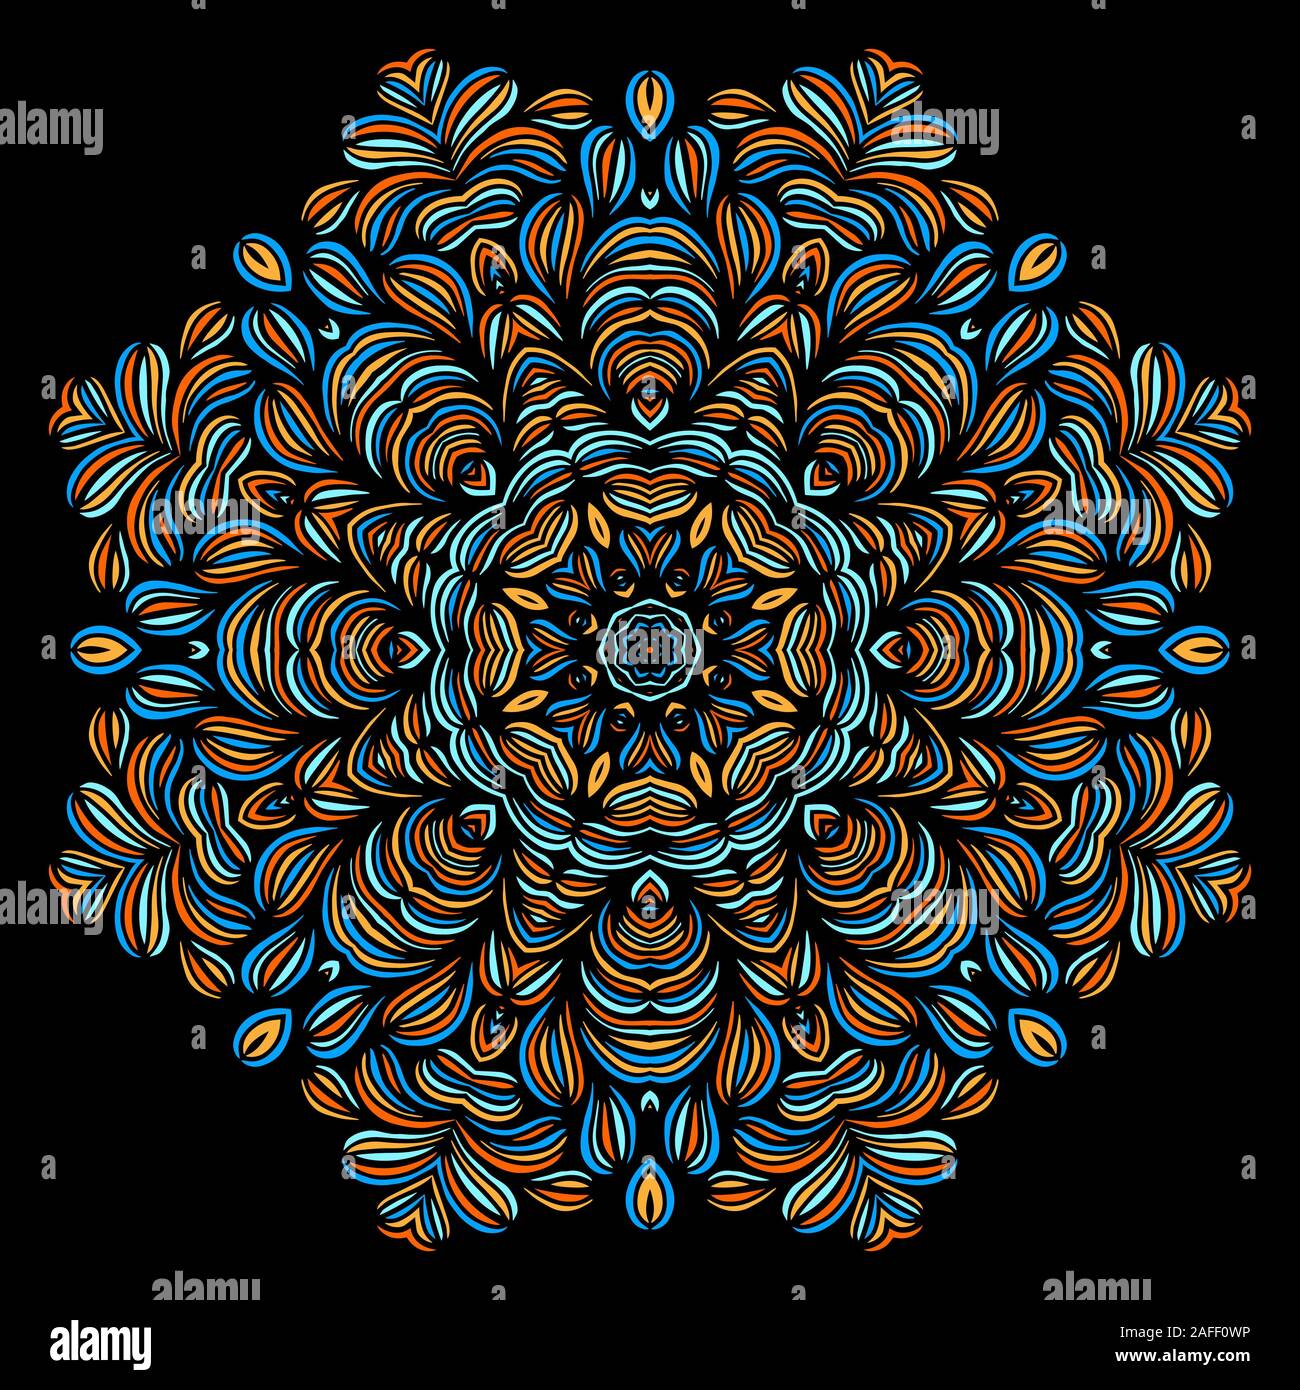 Desenho de Mandala flor de lótus para Colorir - Colorir.com  Dibujos con  mandalas, Tatuajes mandalas, Mandalas para colorear